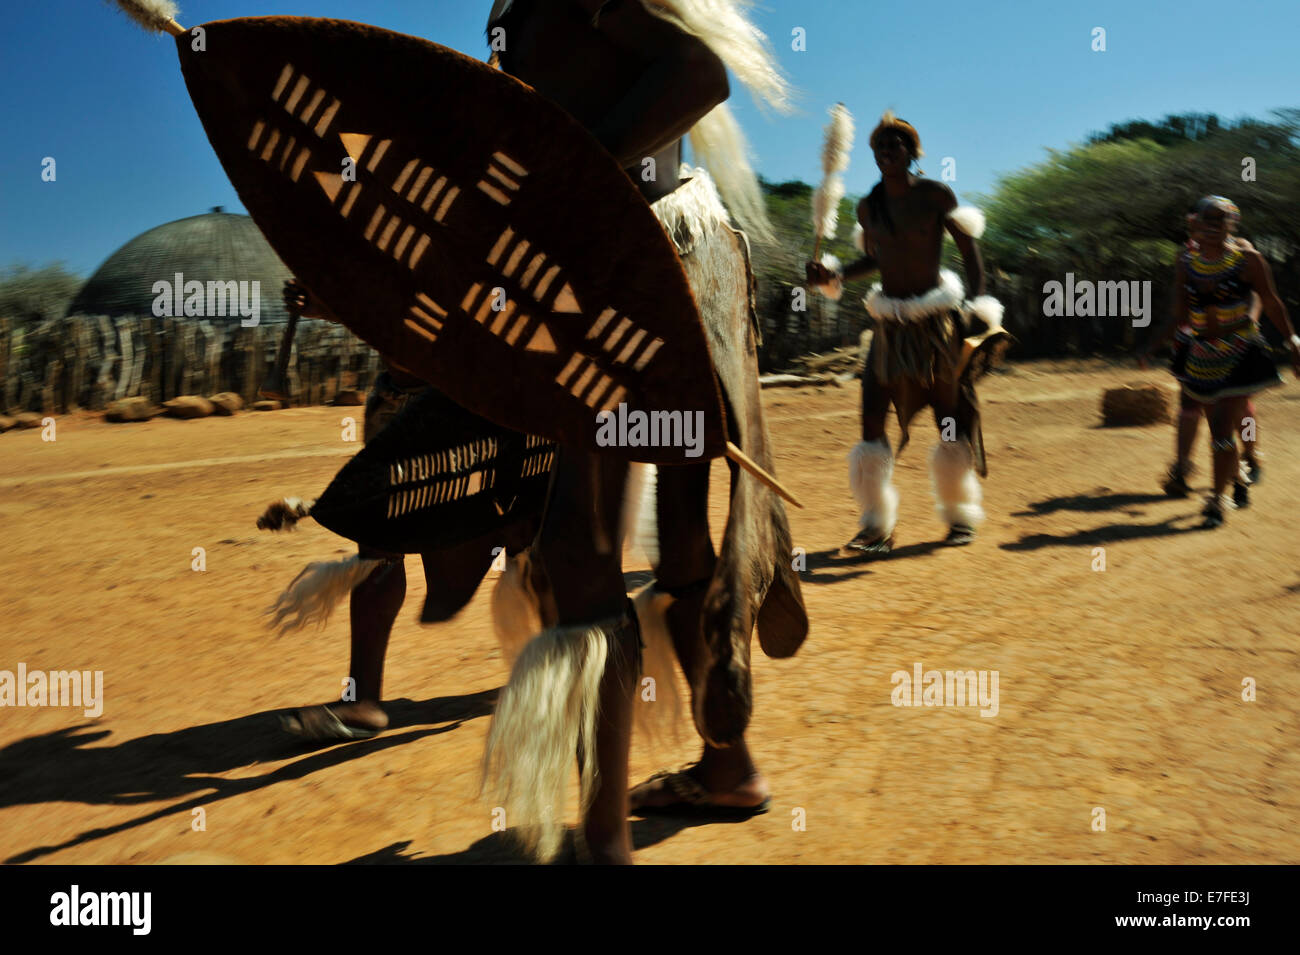 People, culture, adult Zulu men, traditional ceremonial dress, shields walking with maiden, theme village, Shakaland, KwaZulu-Natal, South Africa Stock Photo